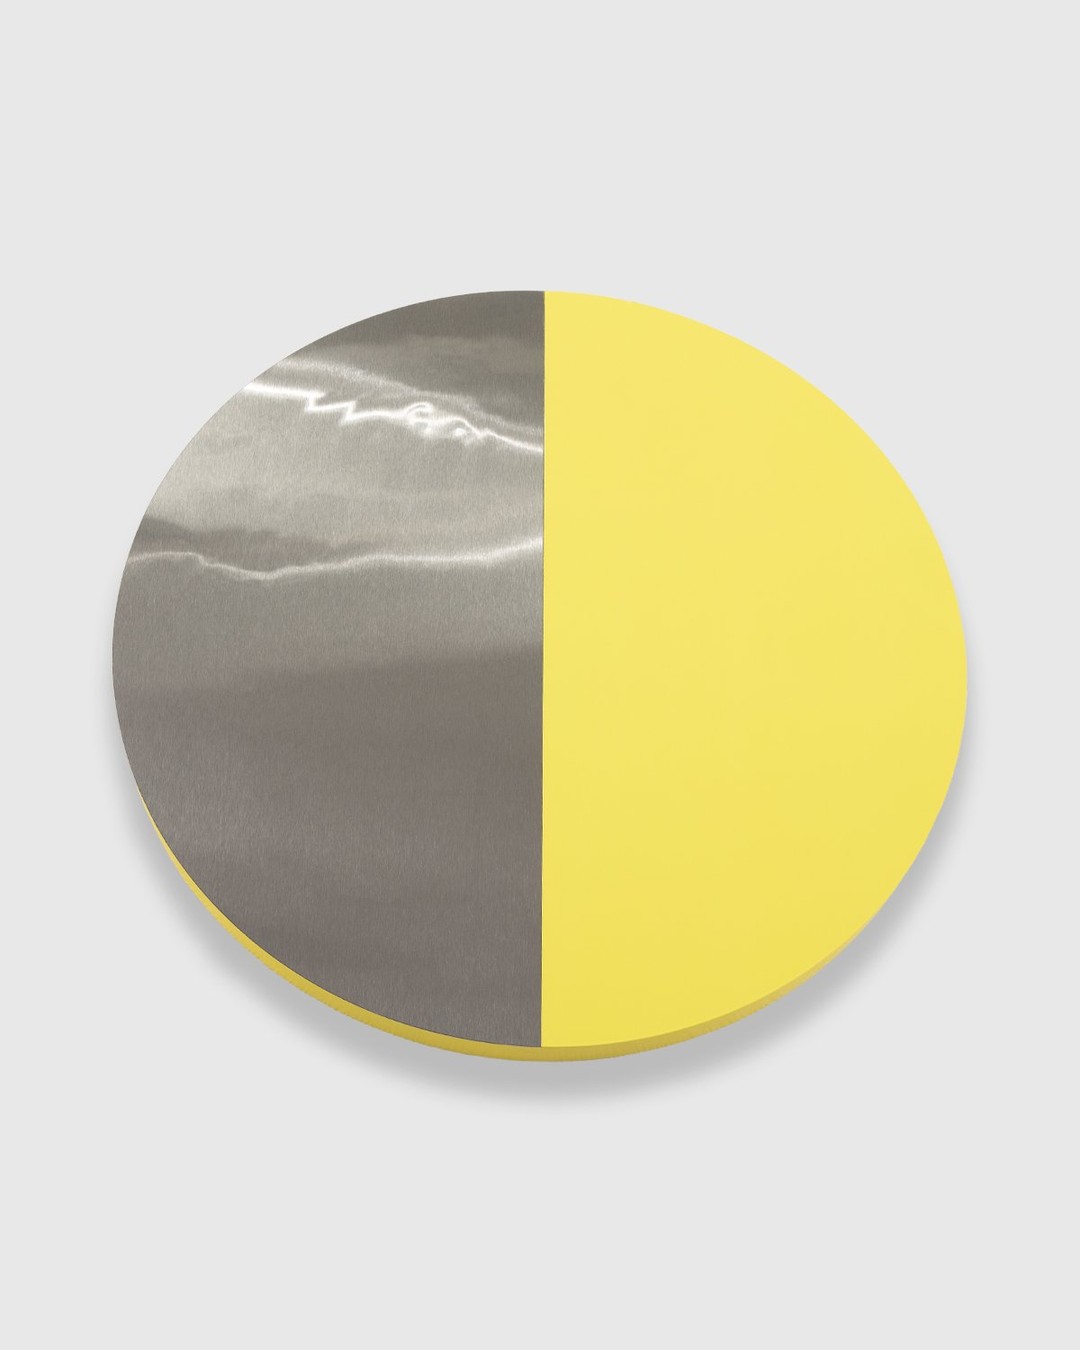 Fiverr – Wall Mounted Mood Board Yellow - Wall Decor - Multi - Image 3